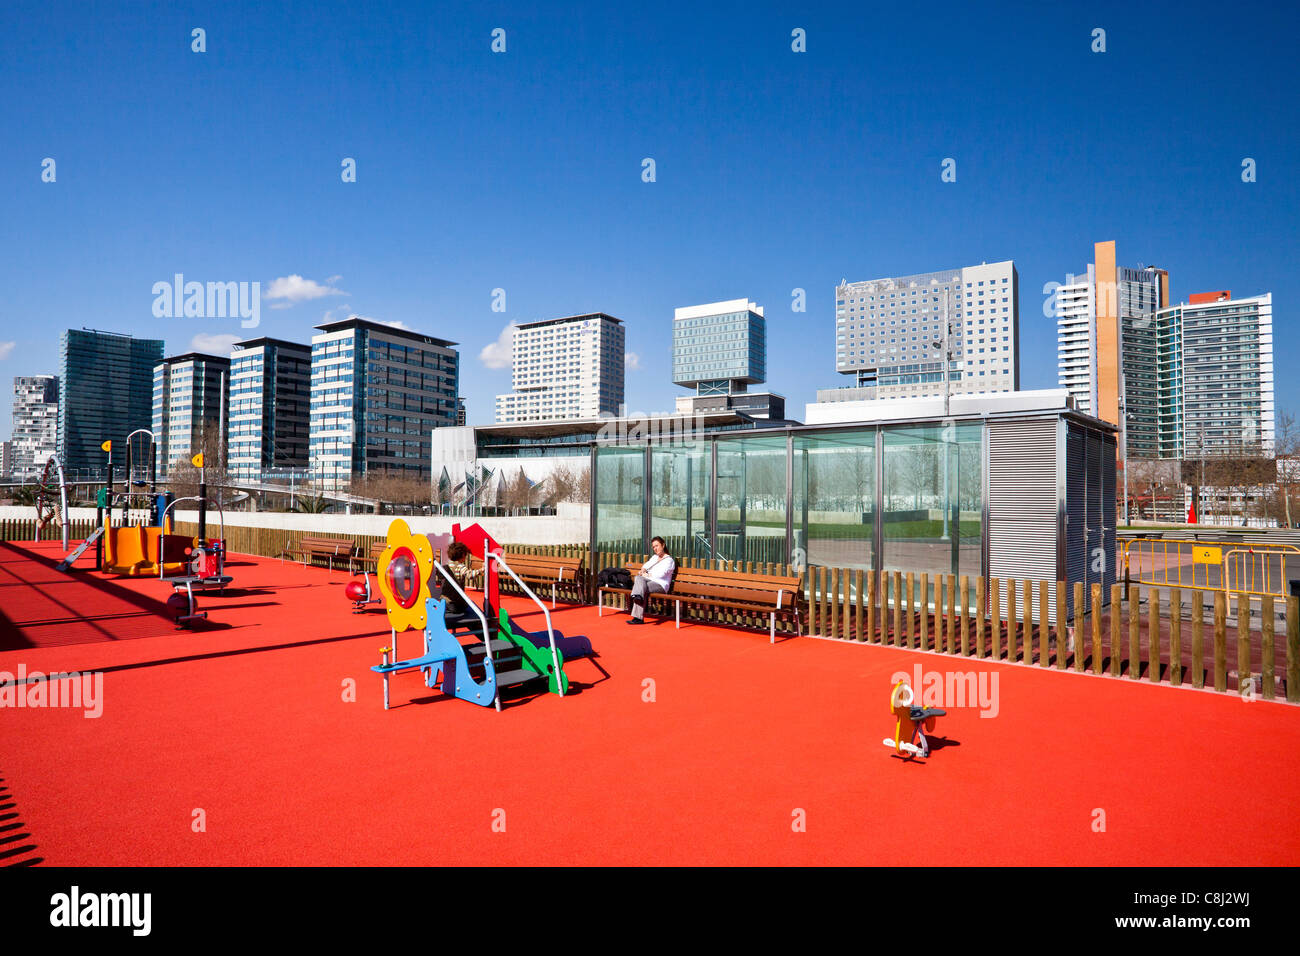 Spain, Europe, Catalunya, Barcelona, Diagonal Mar, Children, toys, Park Stock Photo